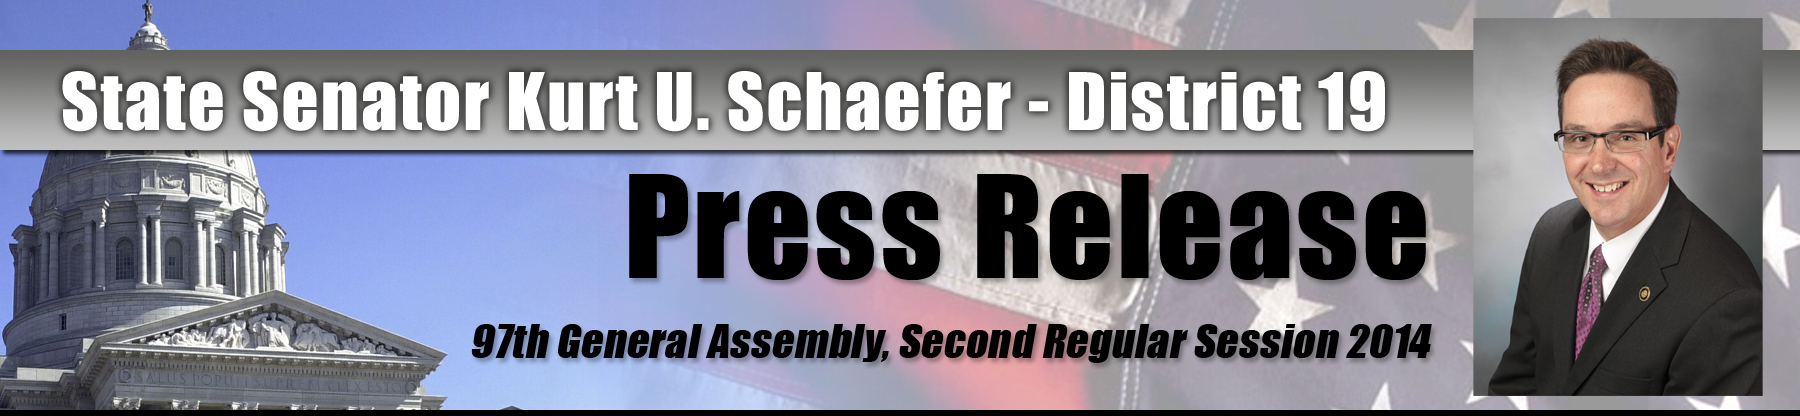 Schaefer - Press Release Banner - 050714